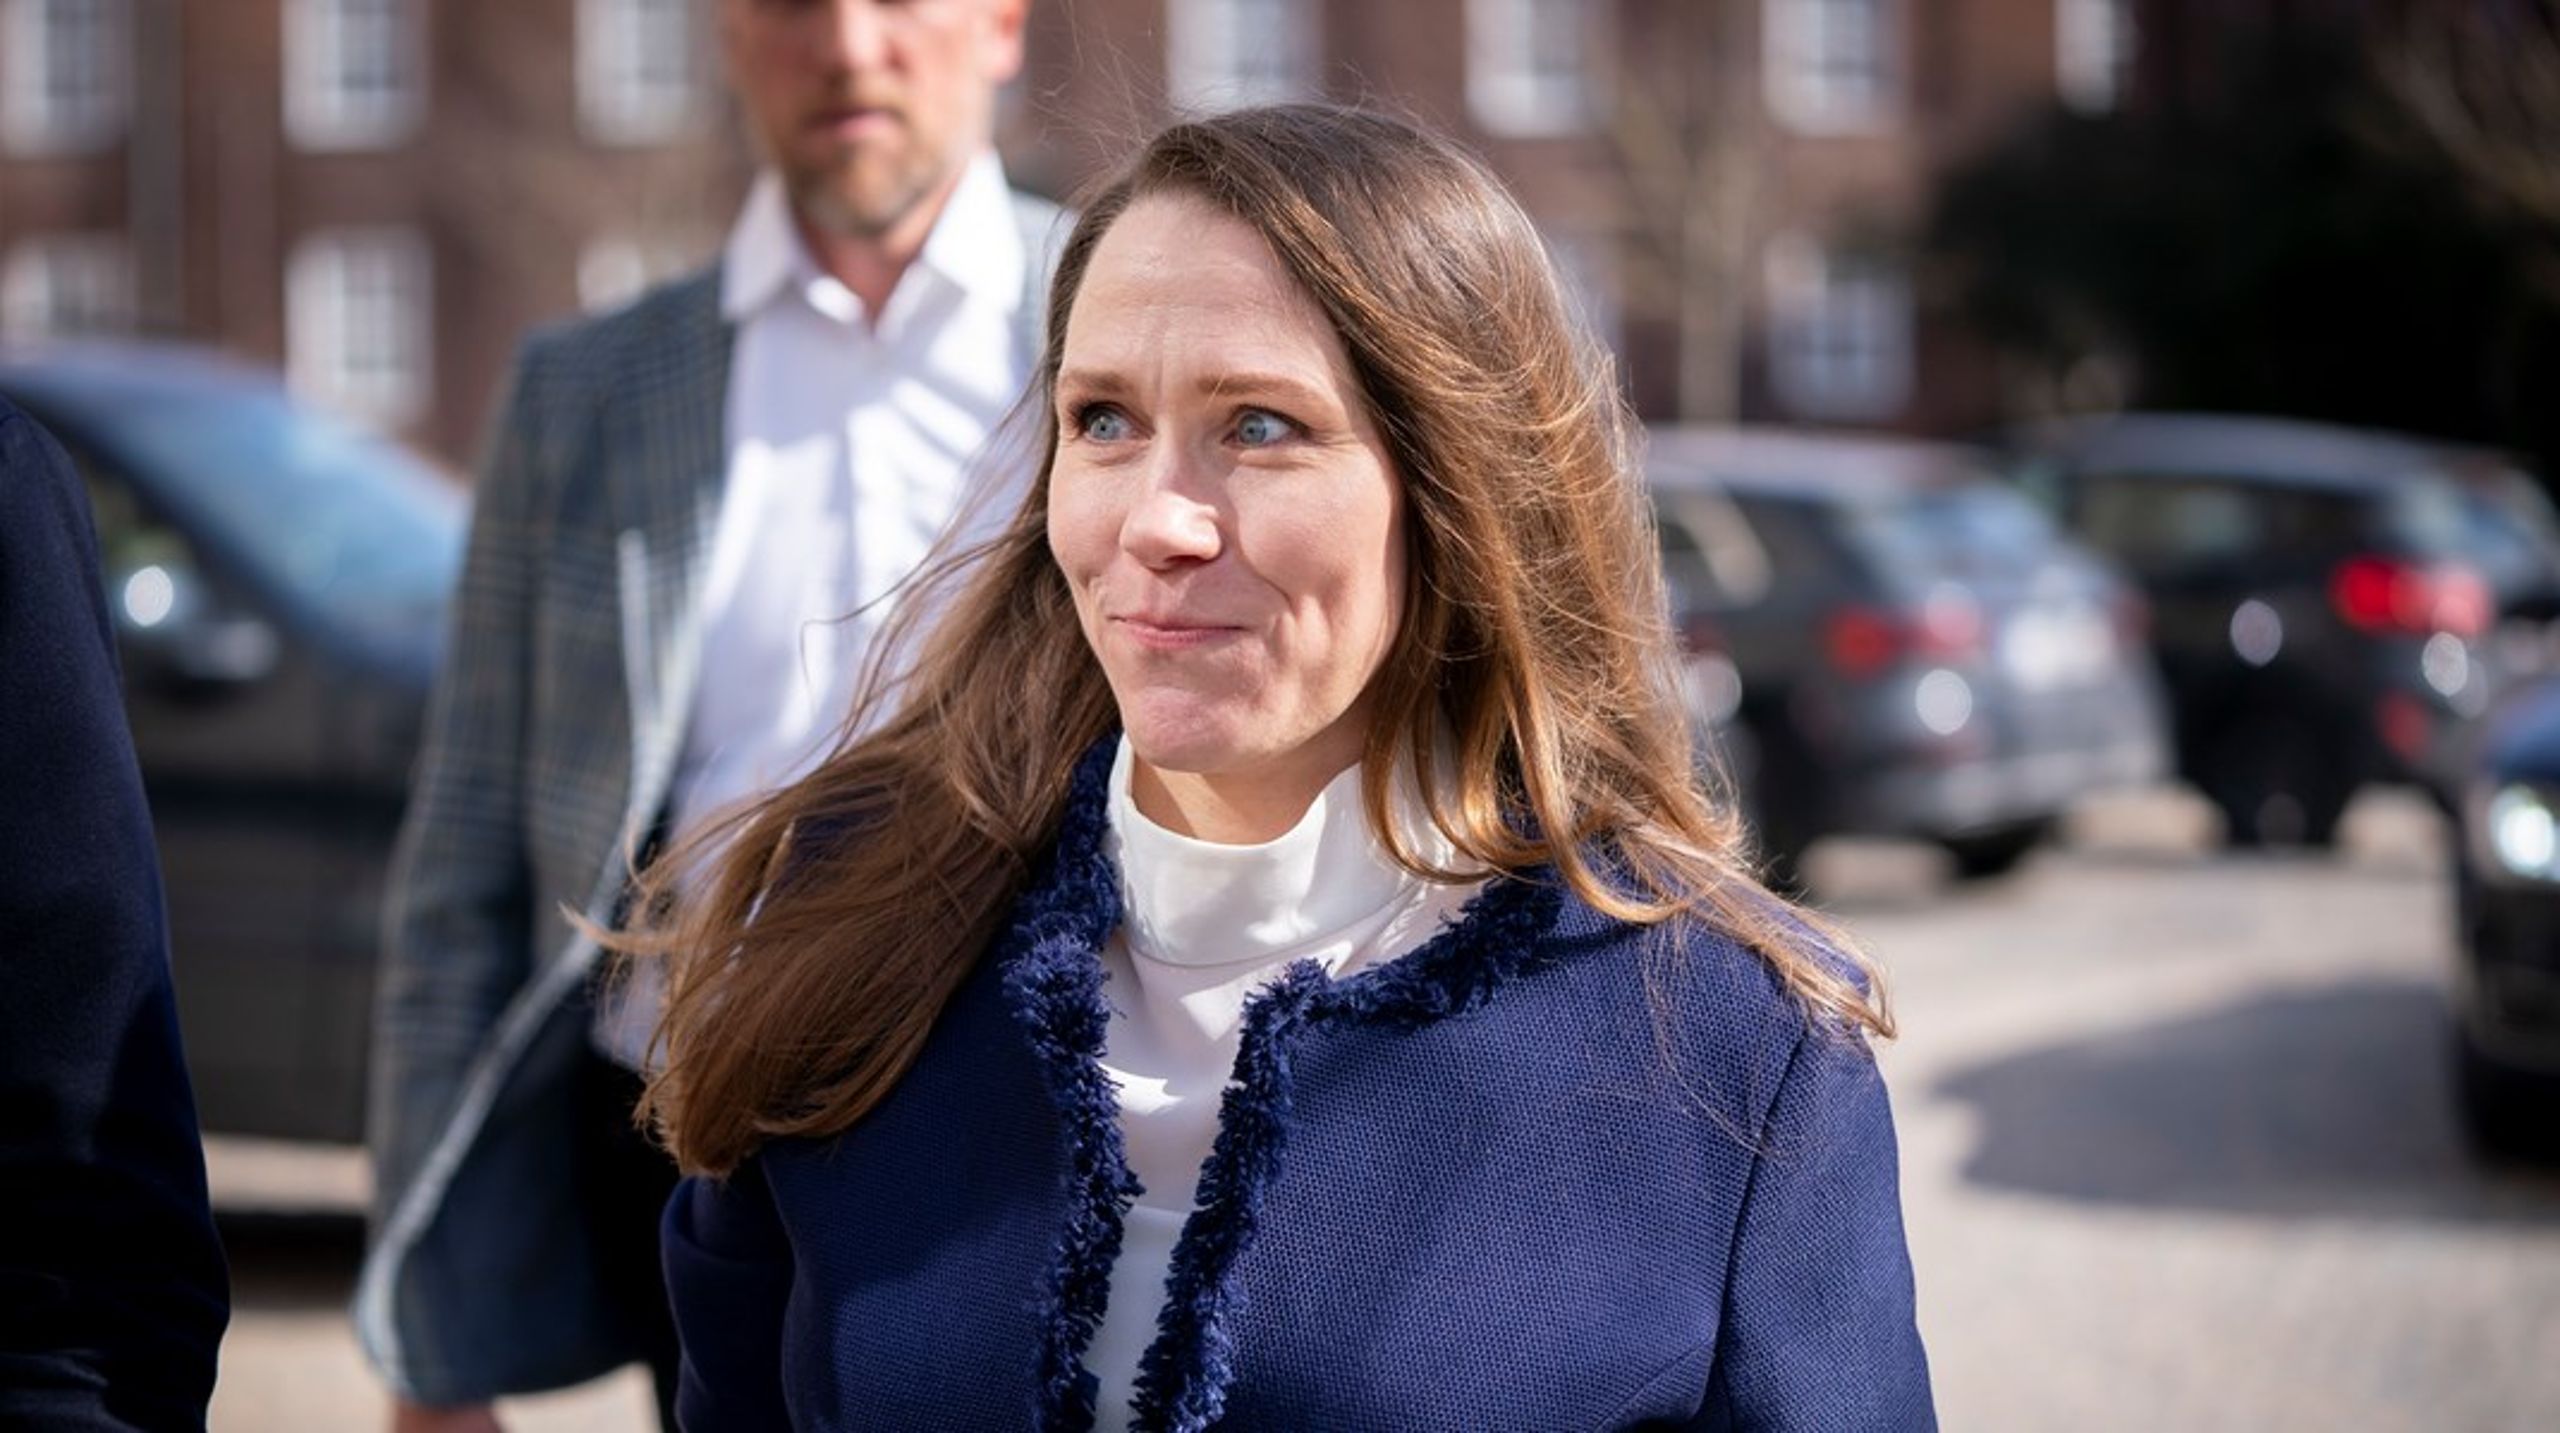 Statsministeriets departementschef, Barbara Bertelsen, ankommer til sin genafhøring i Retten på Frederiksberg 1. april. Arkivfoto.&nbsp;